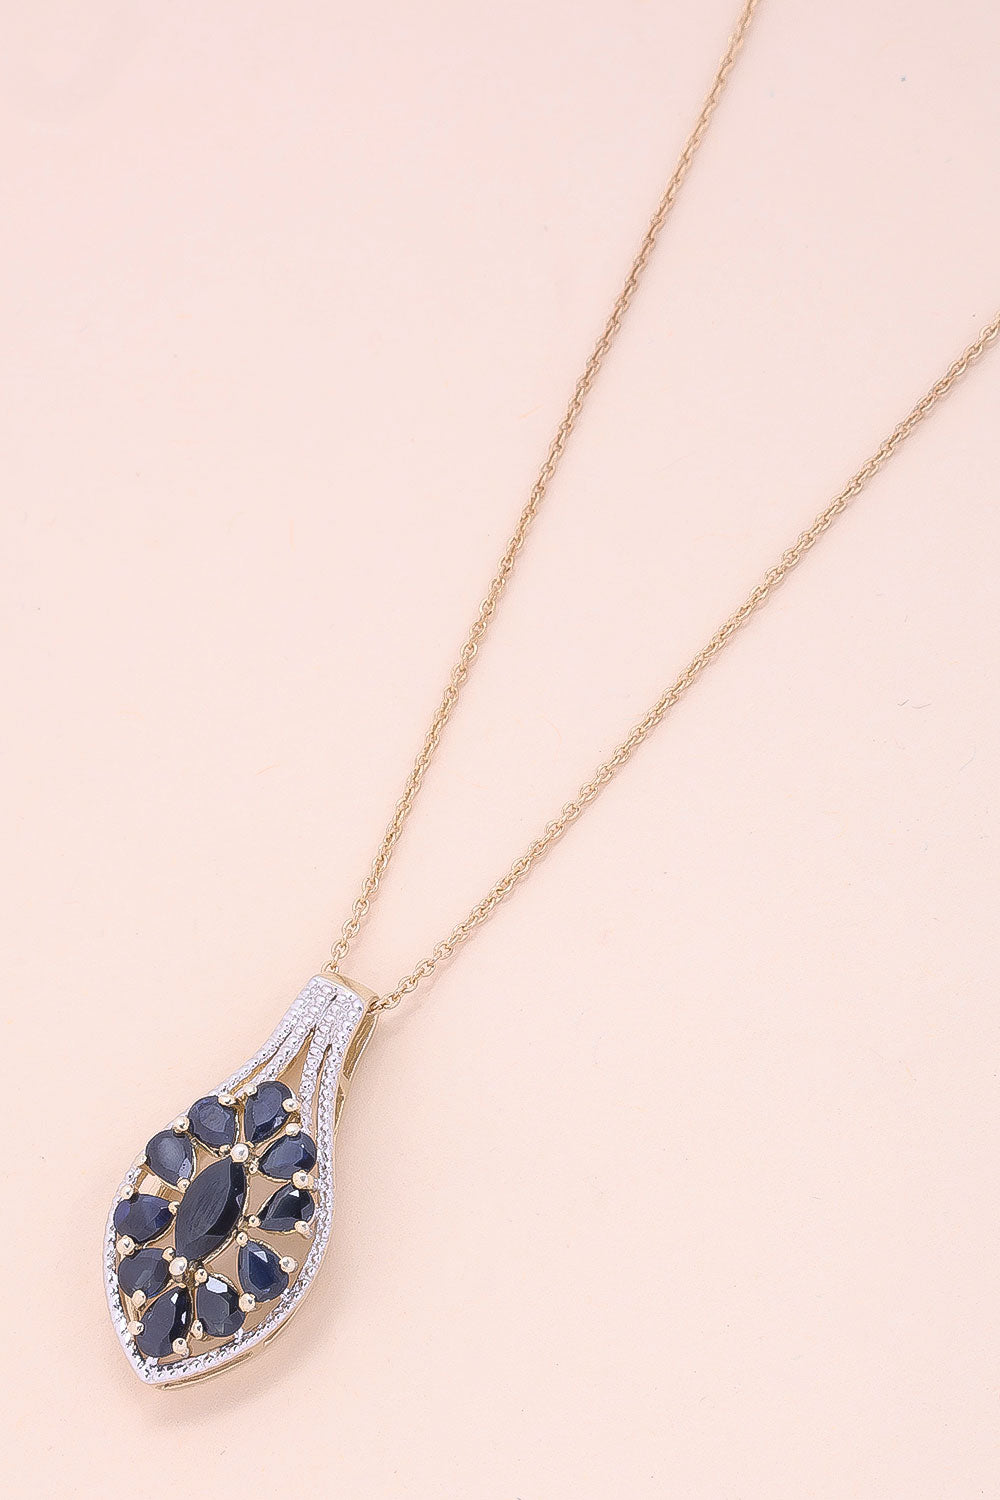 Blue Sapphire Silver Necklace Pendant Chain 10067178 - Avishya